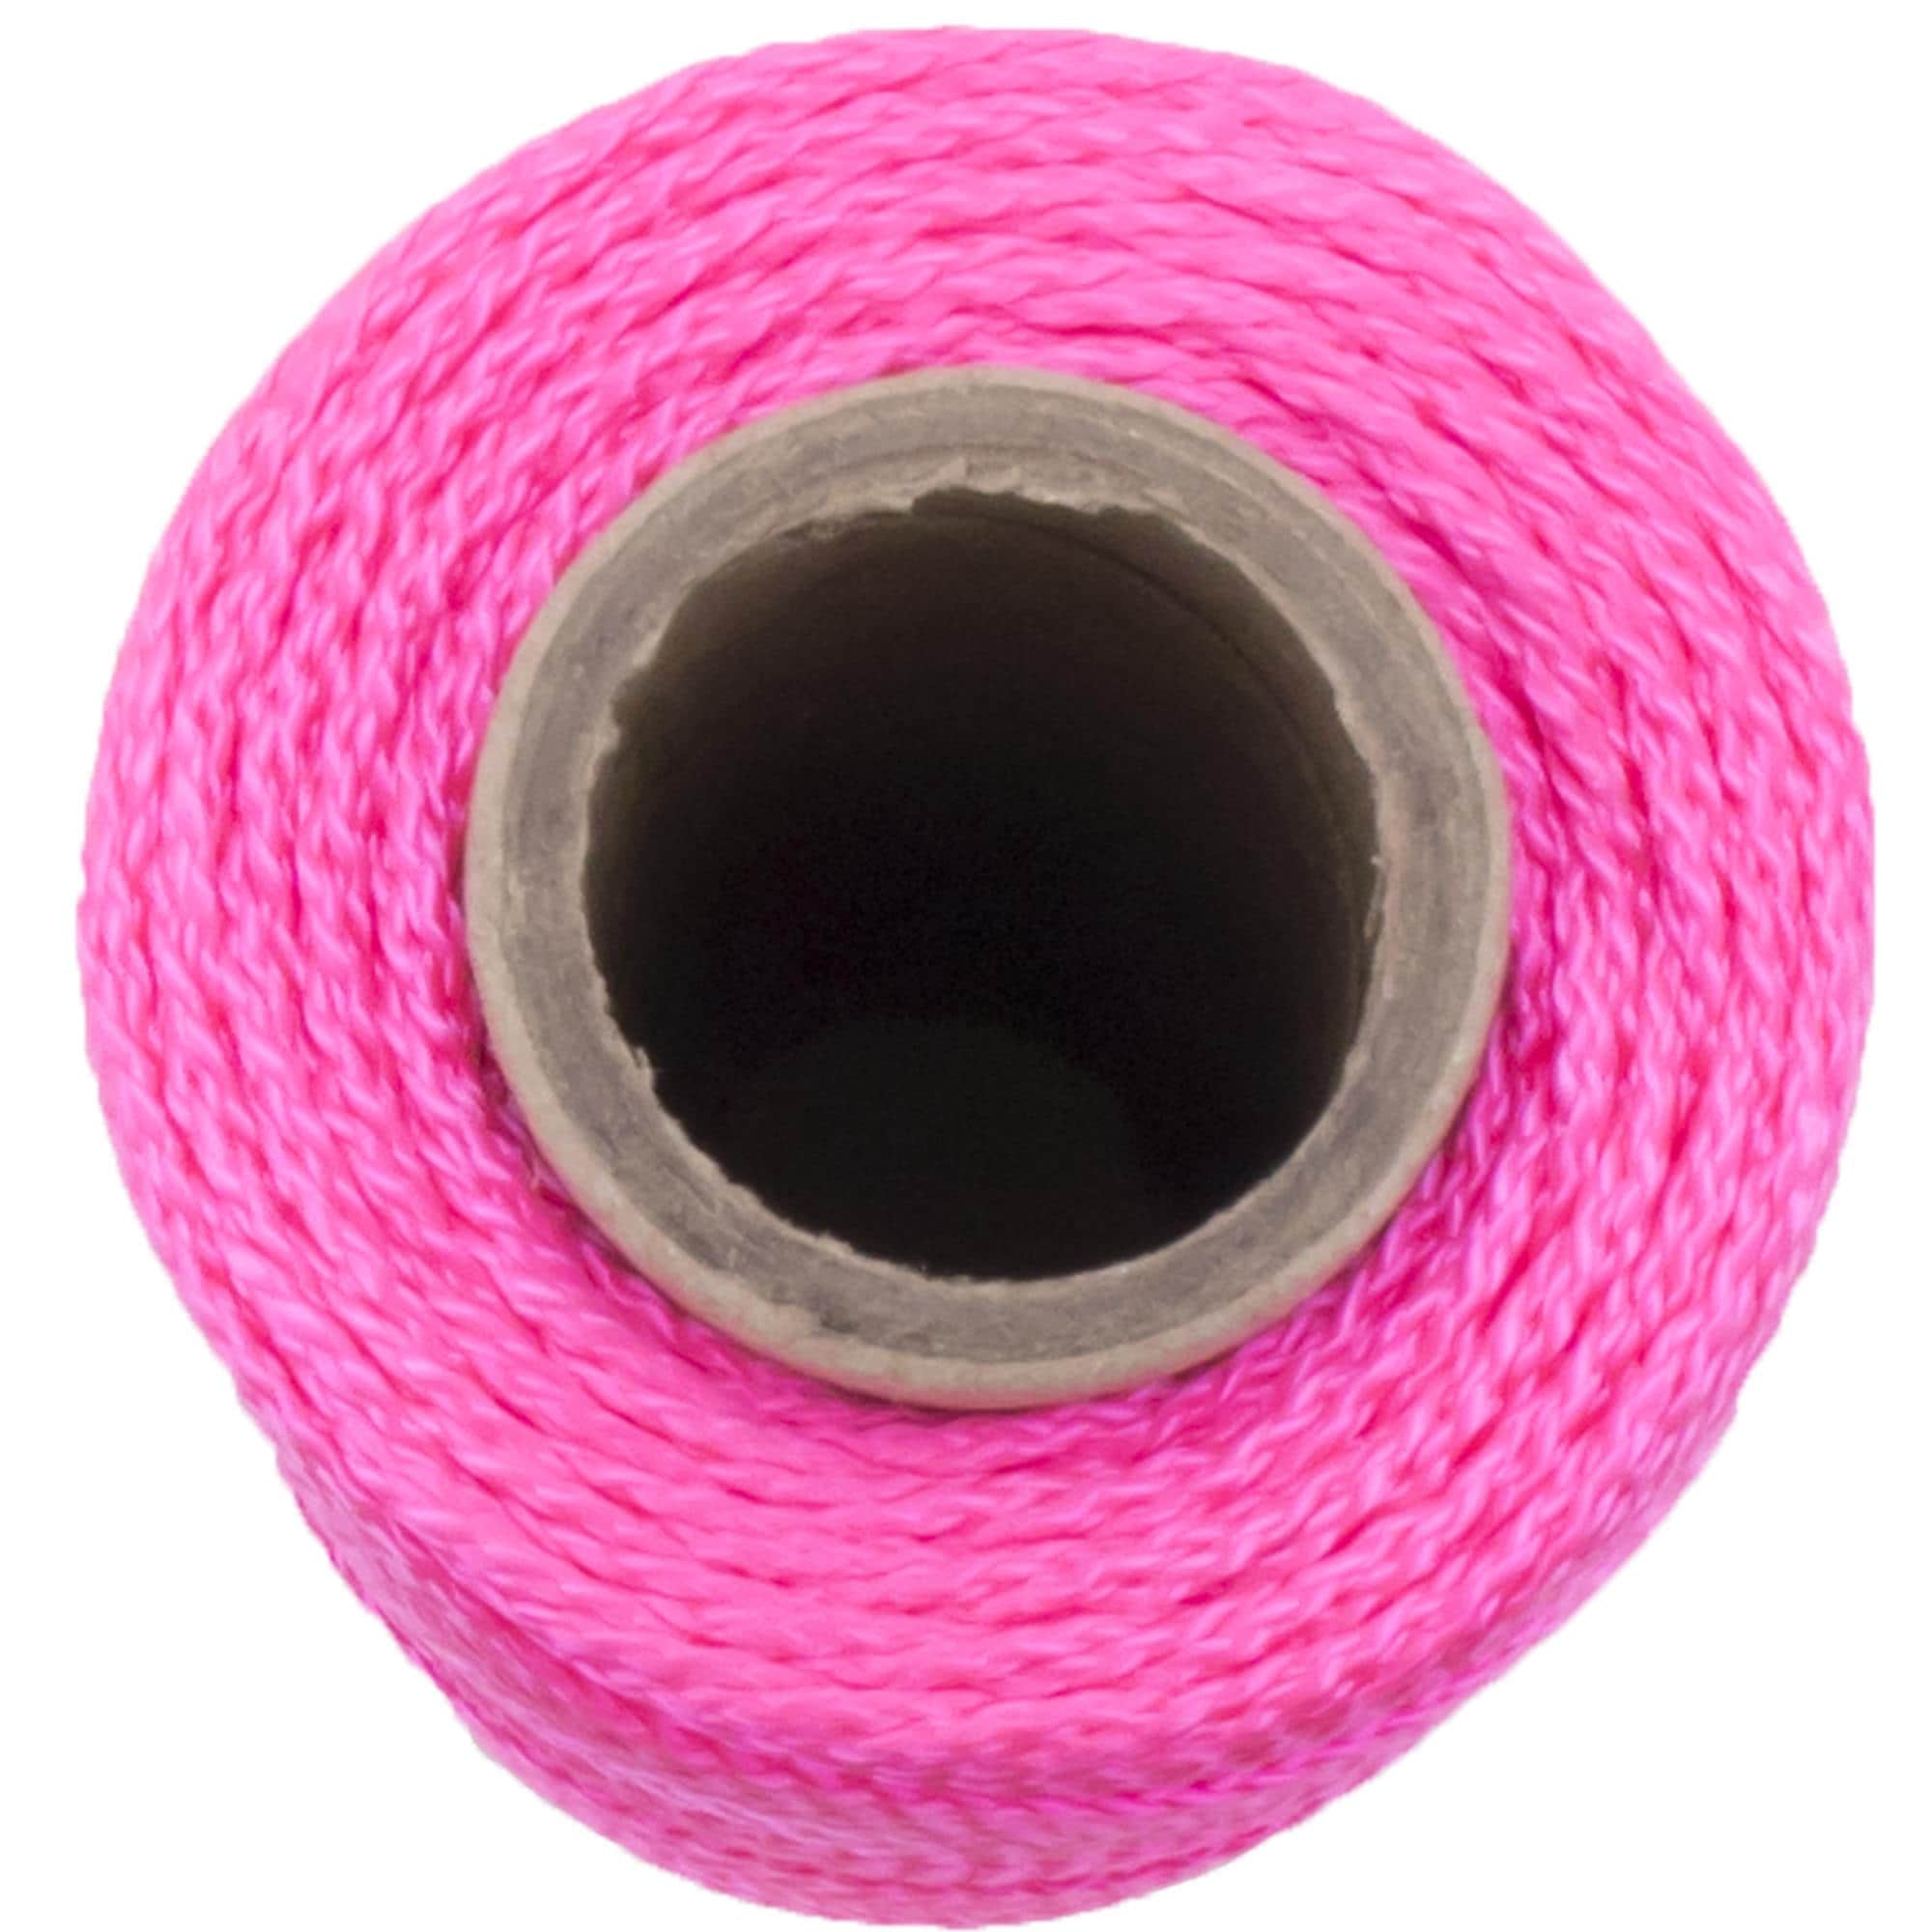 Keson PT545 String Line Twisted Nylon Pink 545 ft.